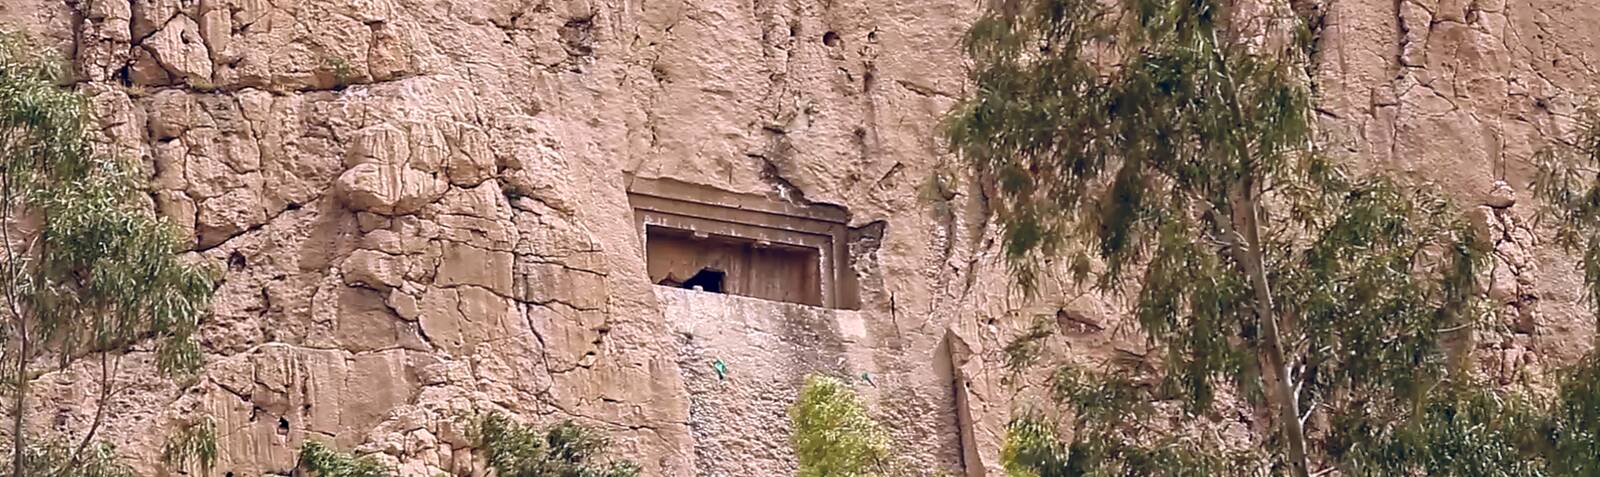 Dokan-e-Davood Rock Tomb